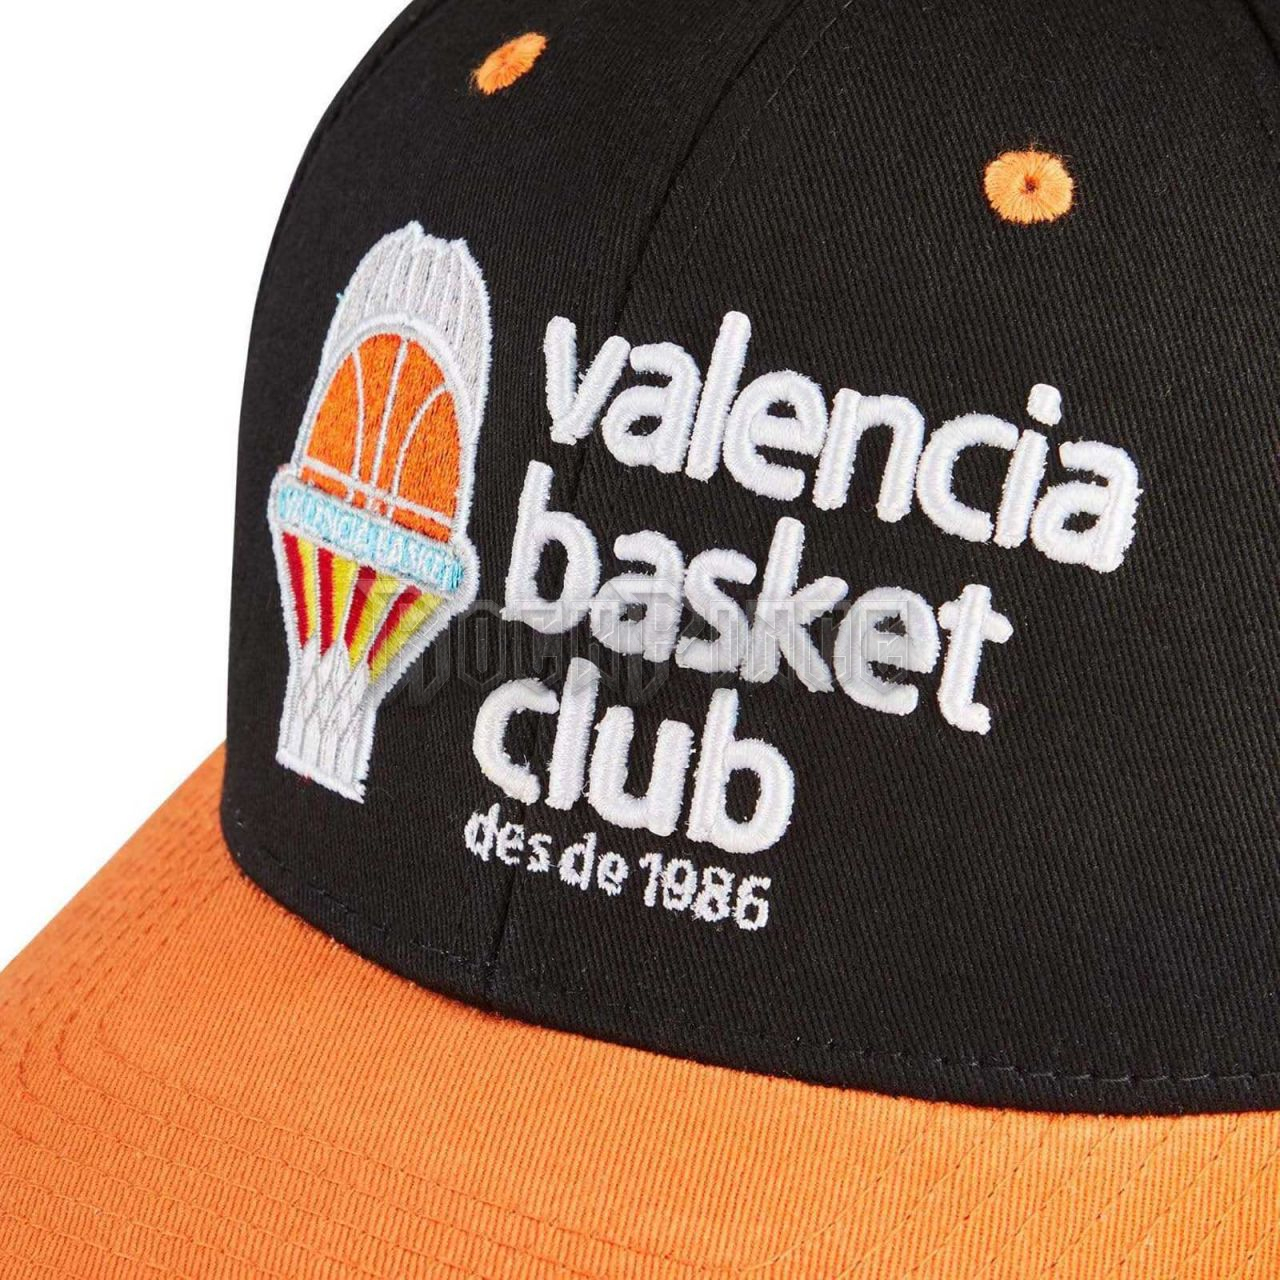 Tokyo Time - Valencia Basket Club - snapback sapka - TOKYOSBCAP37BO